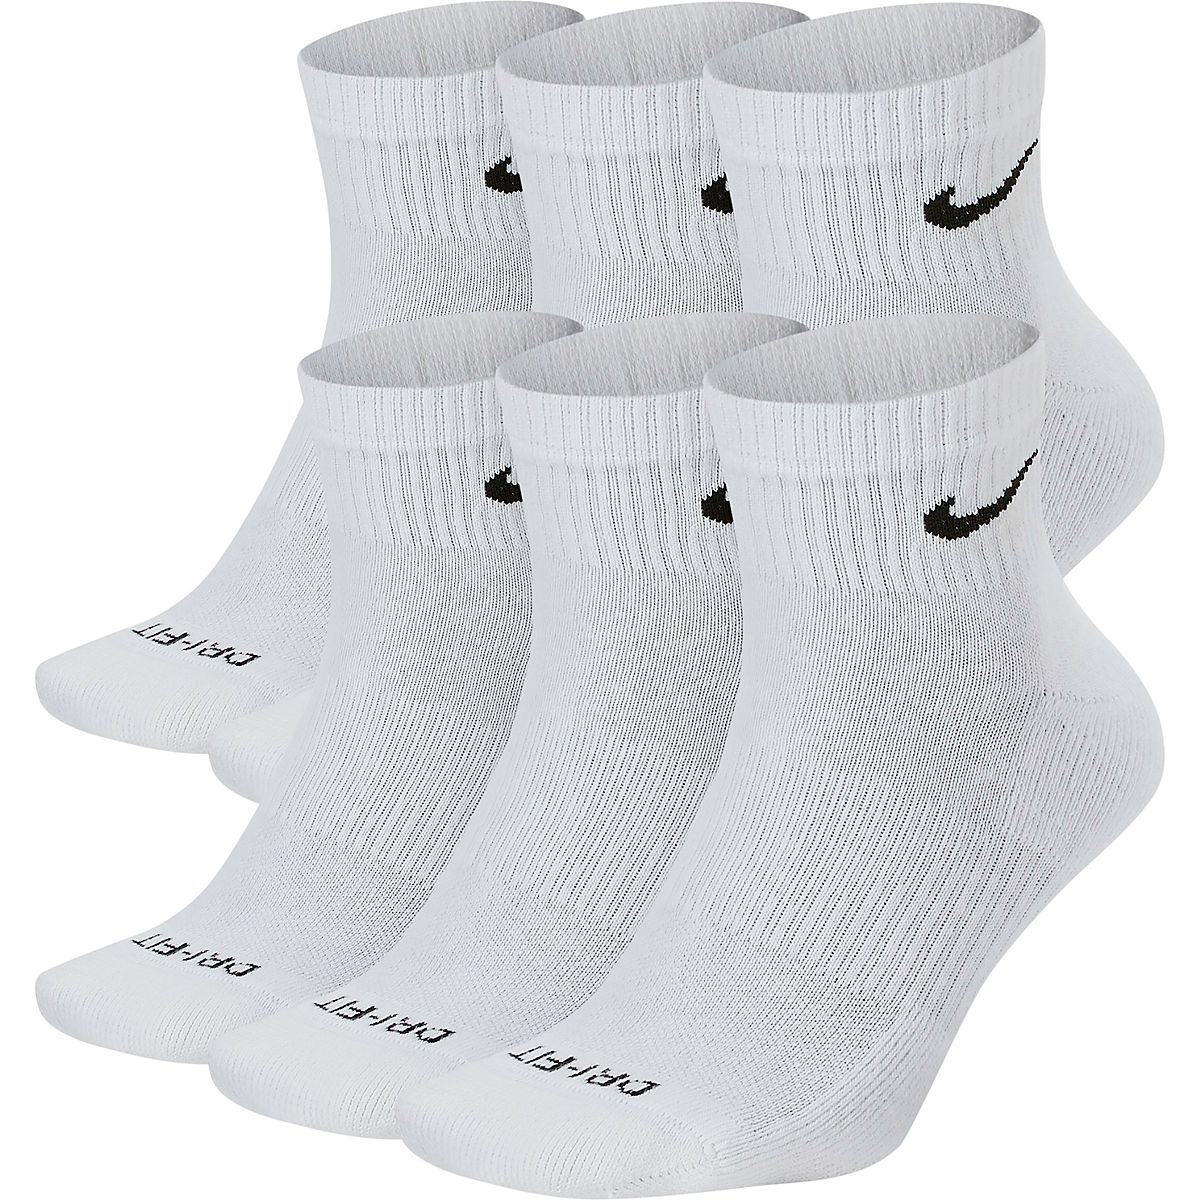 Nike Men's Everyday Plus Cushion Dri-FIT Training Ankle Socks 6 Pack ...